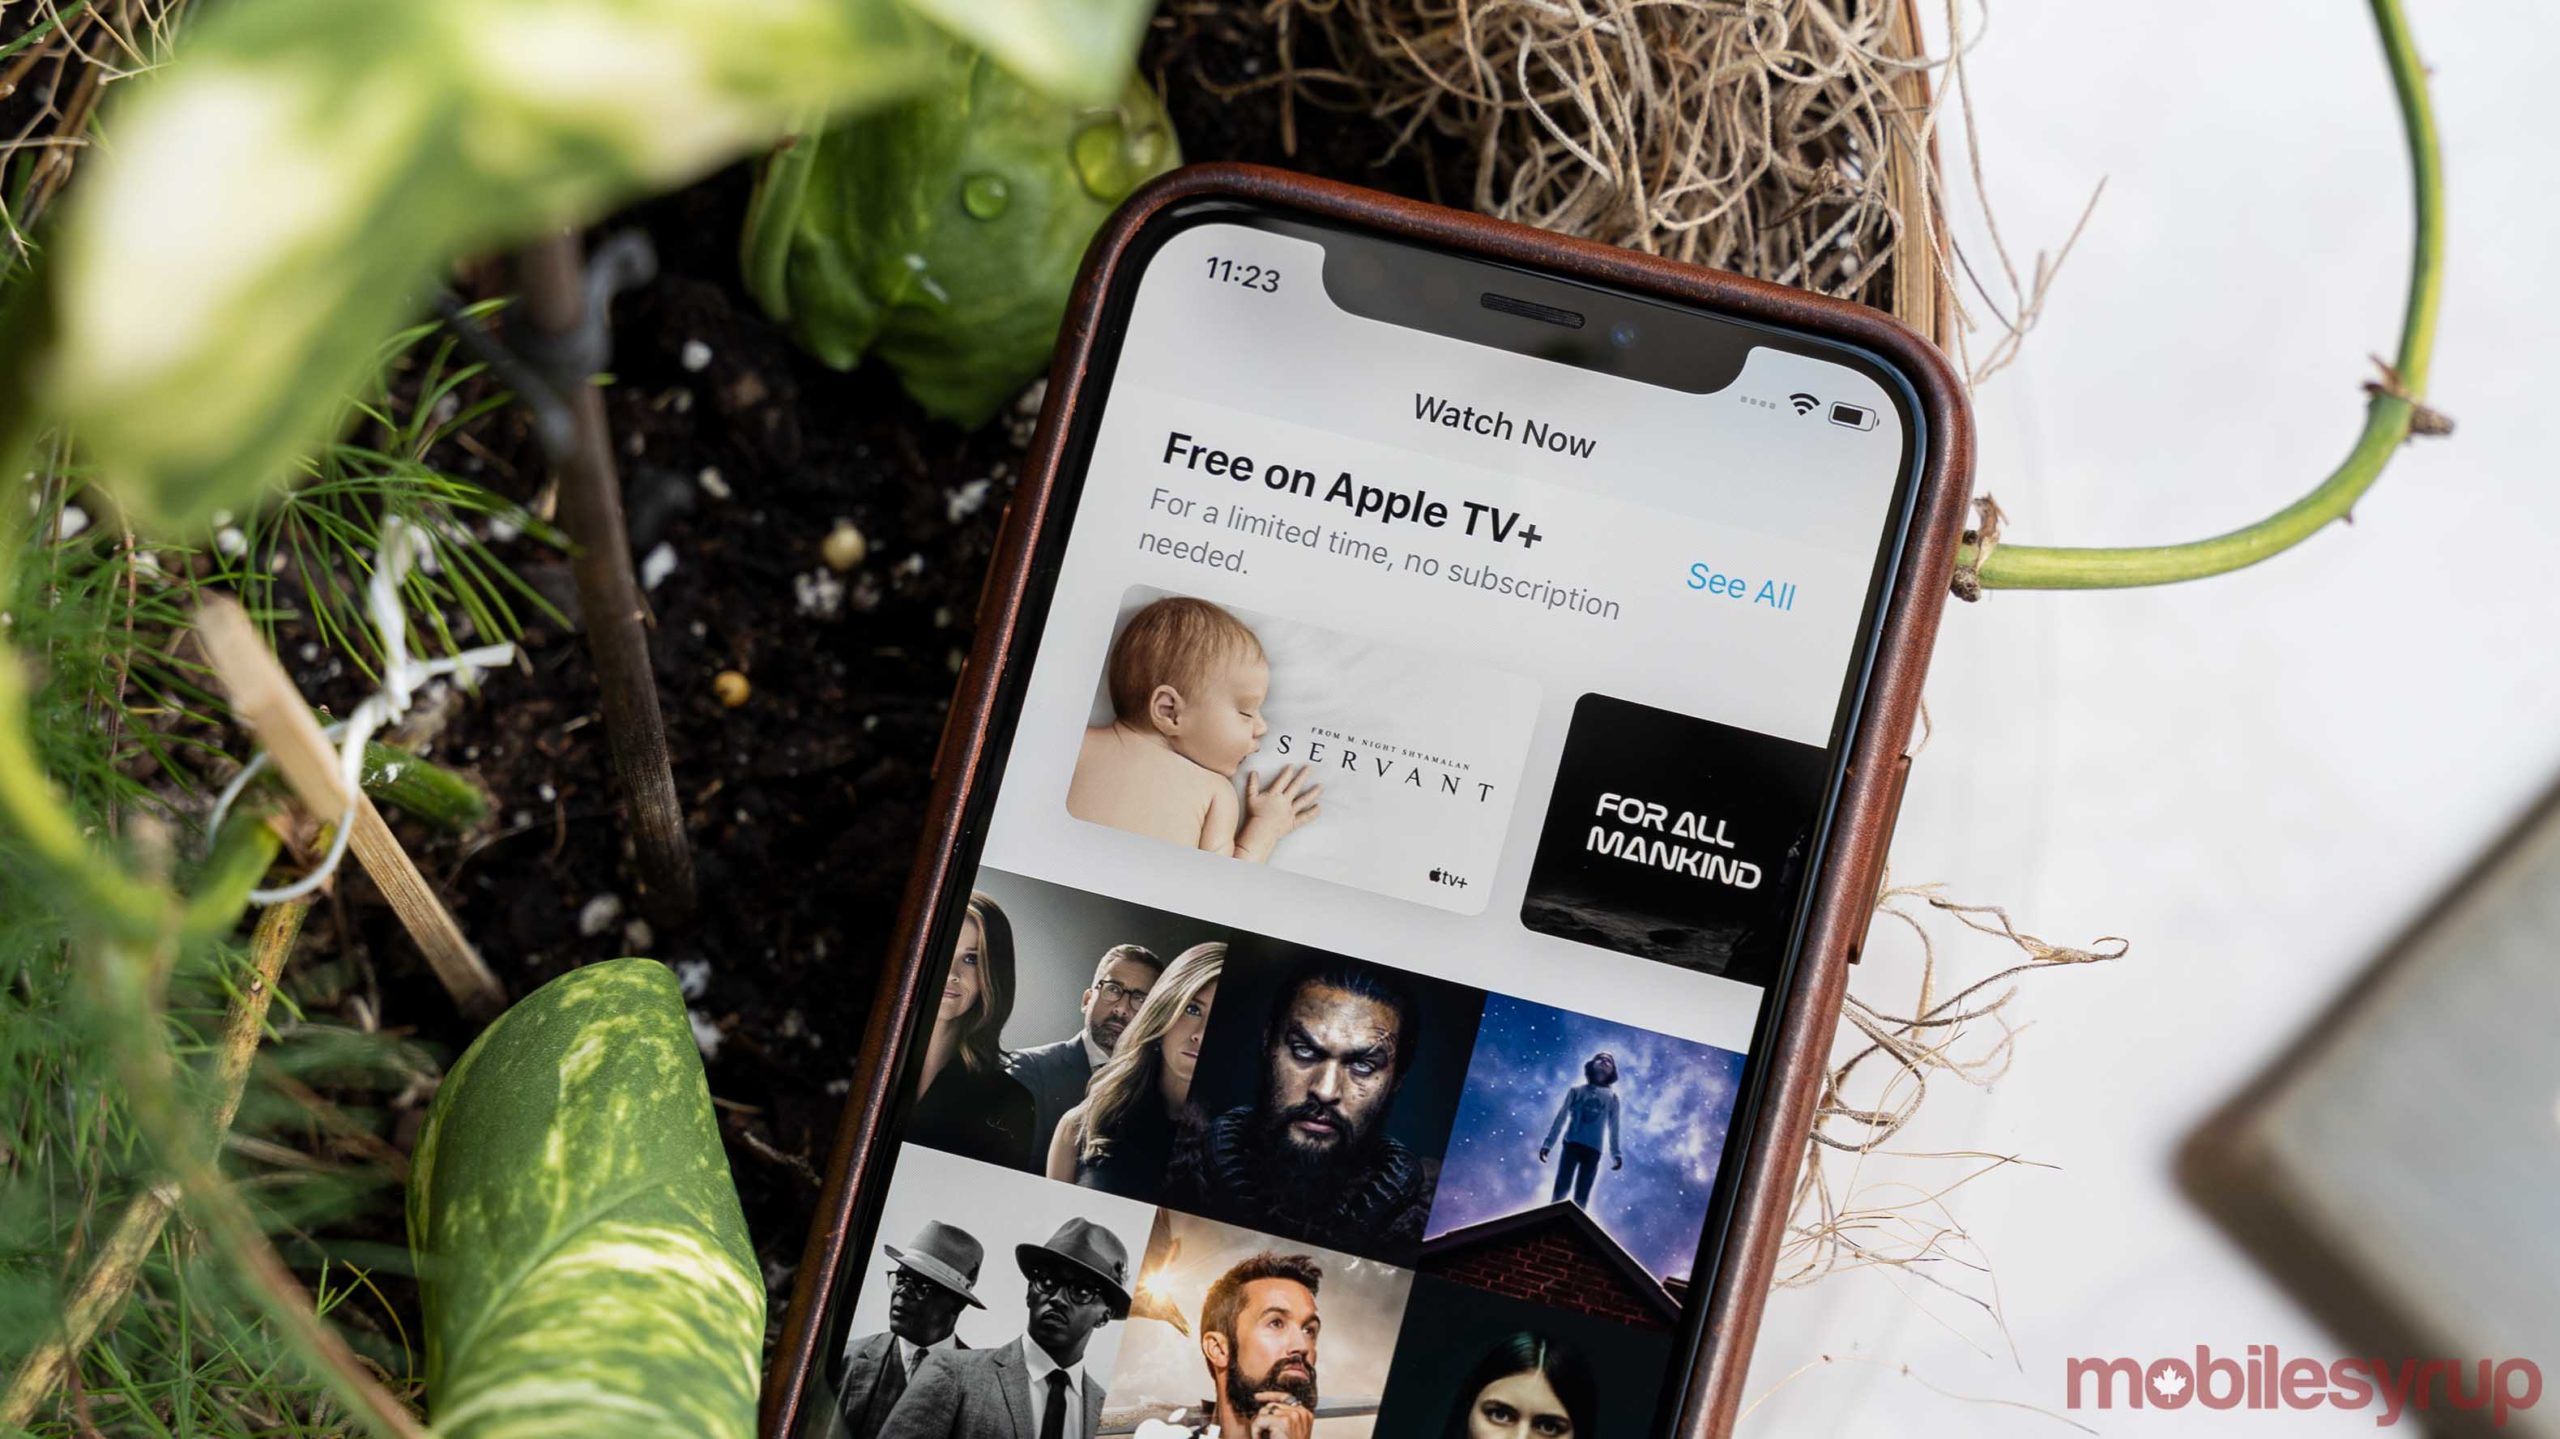 Apple TV+ free shows